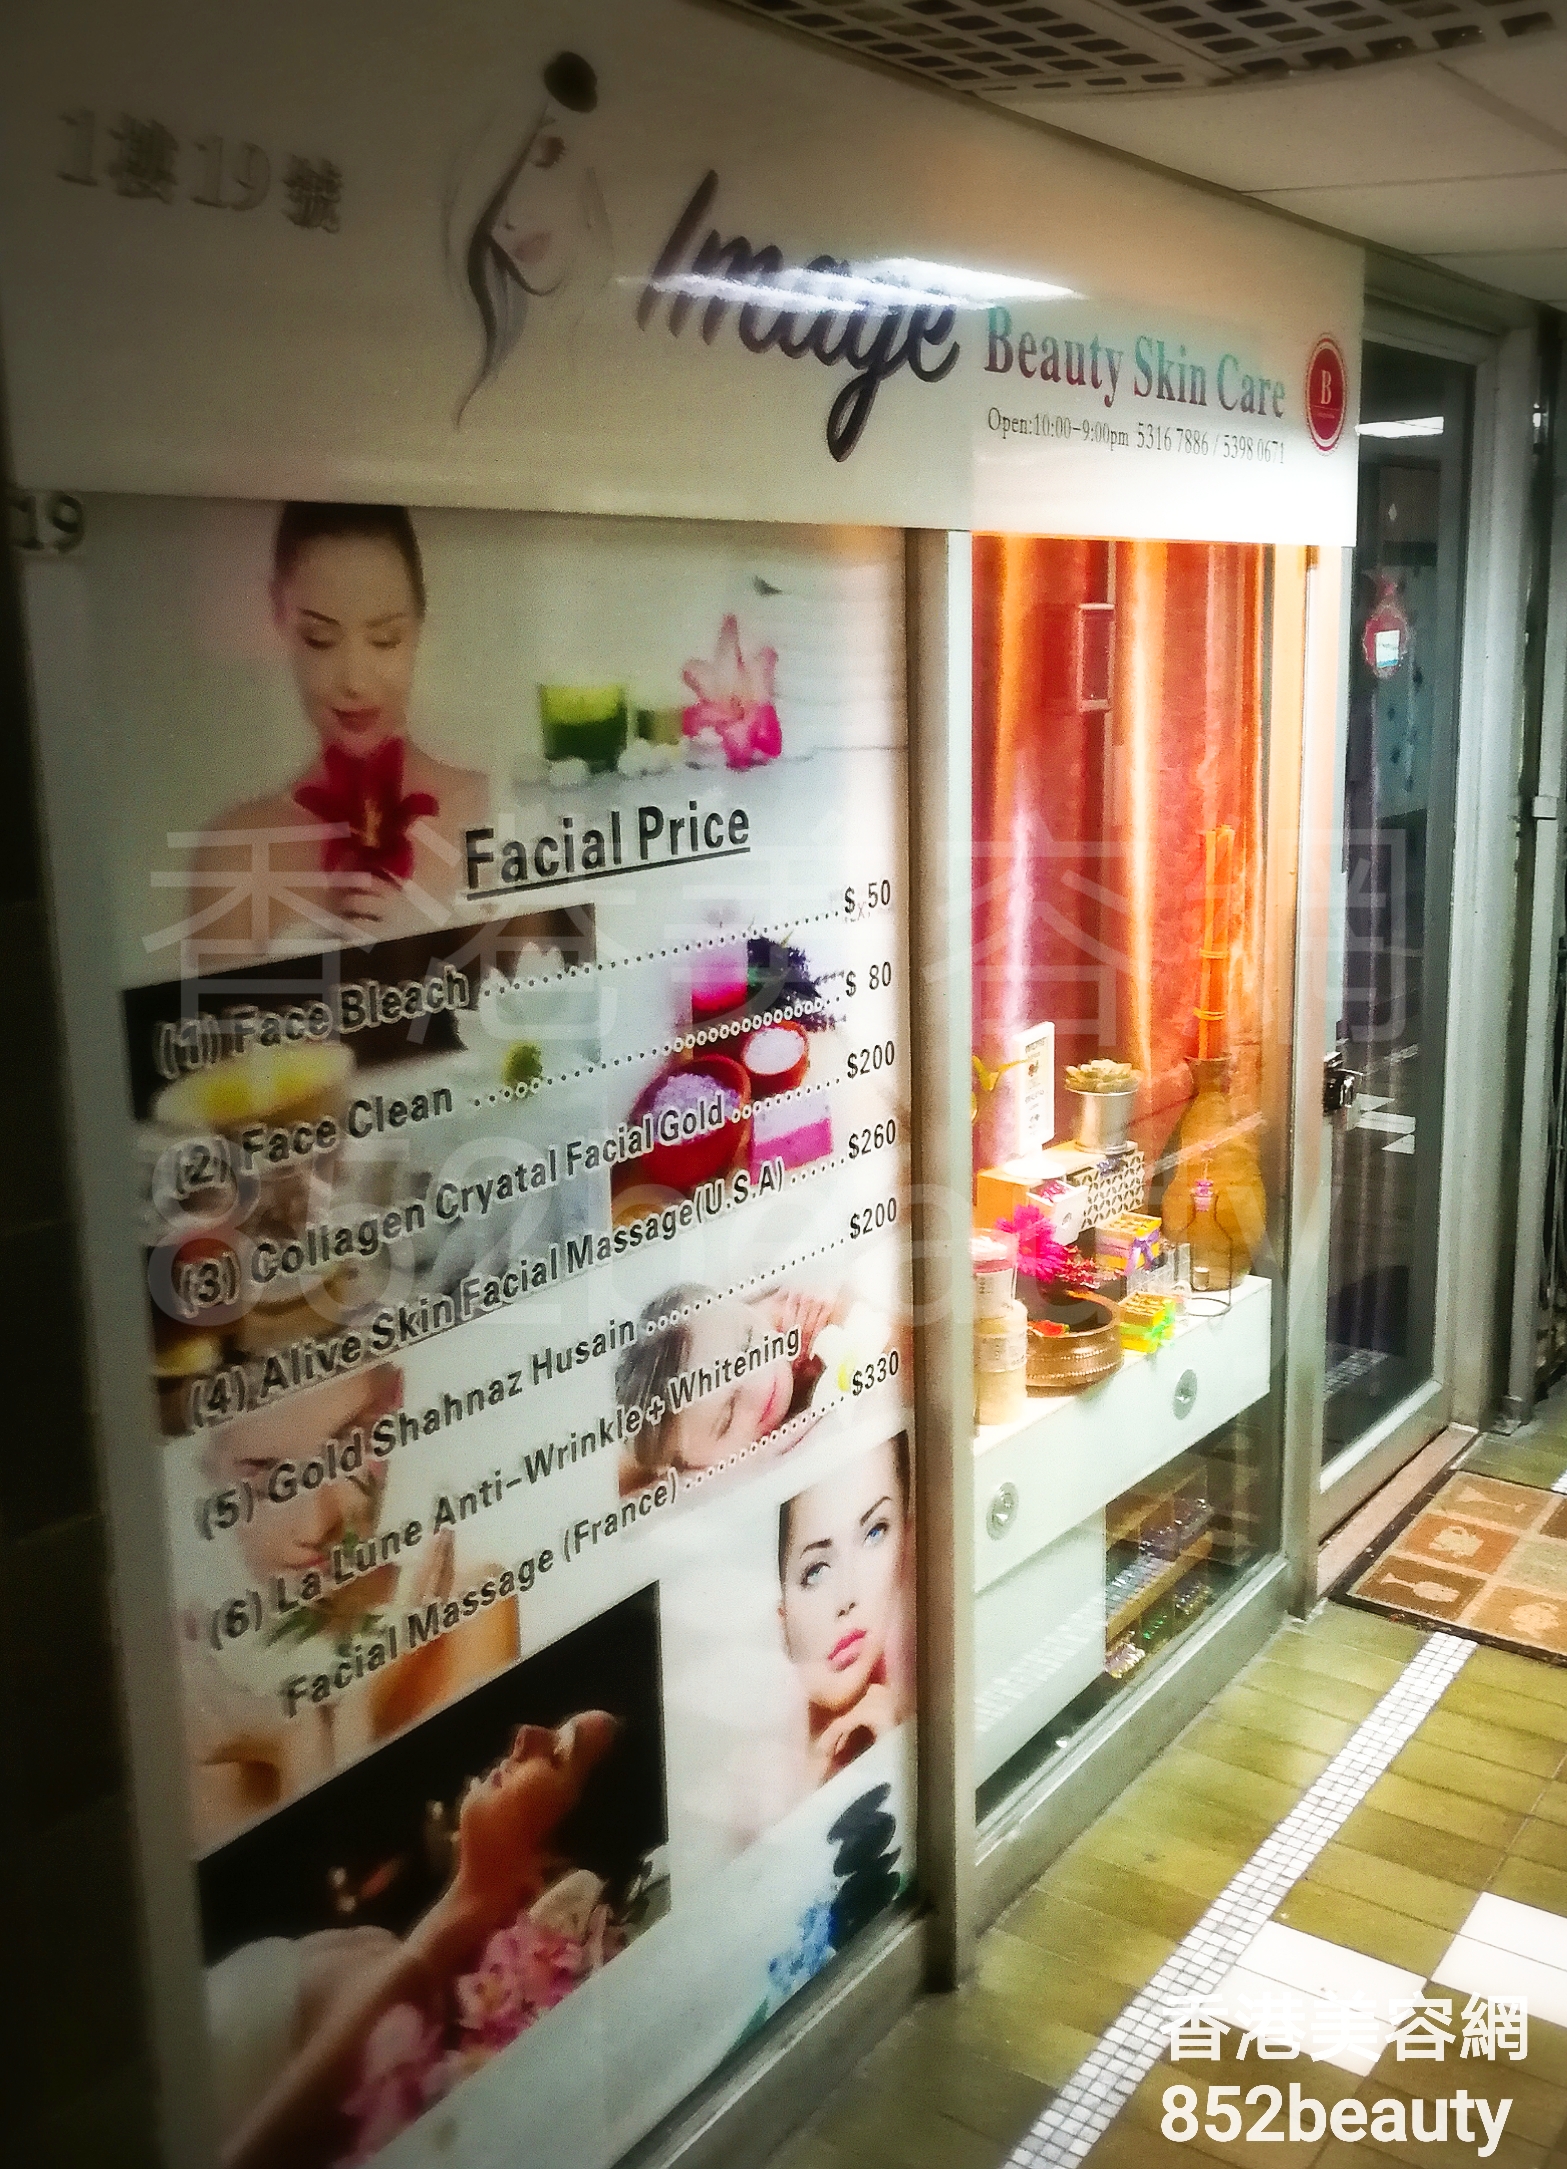 香港美容網 Hong Kong Beauty Salon 美容院 / 美容師: Image Beauty Skin Care